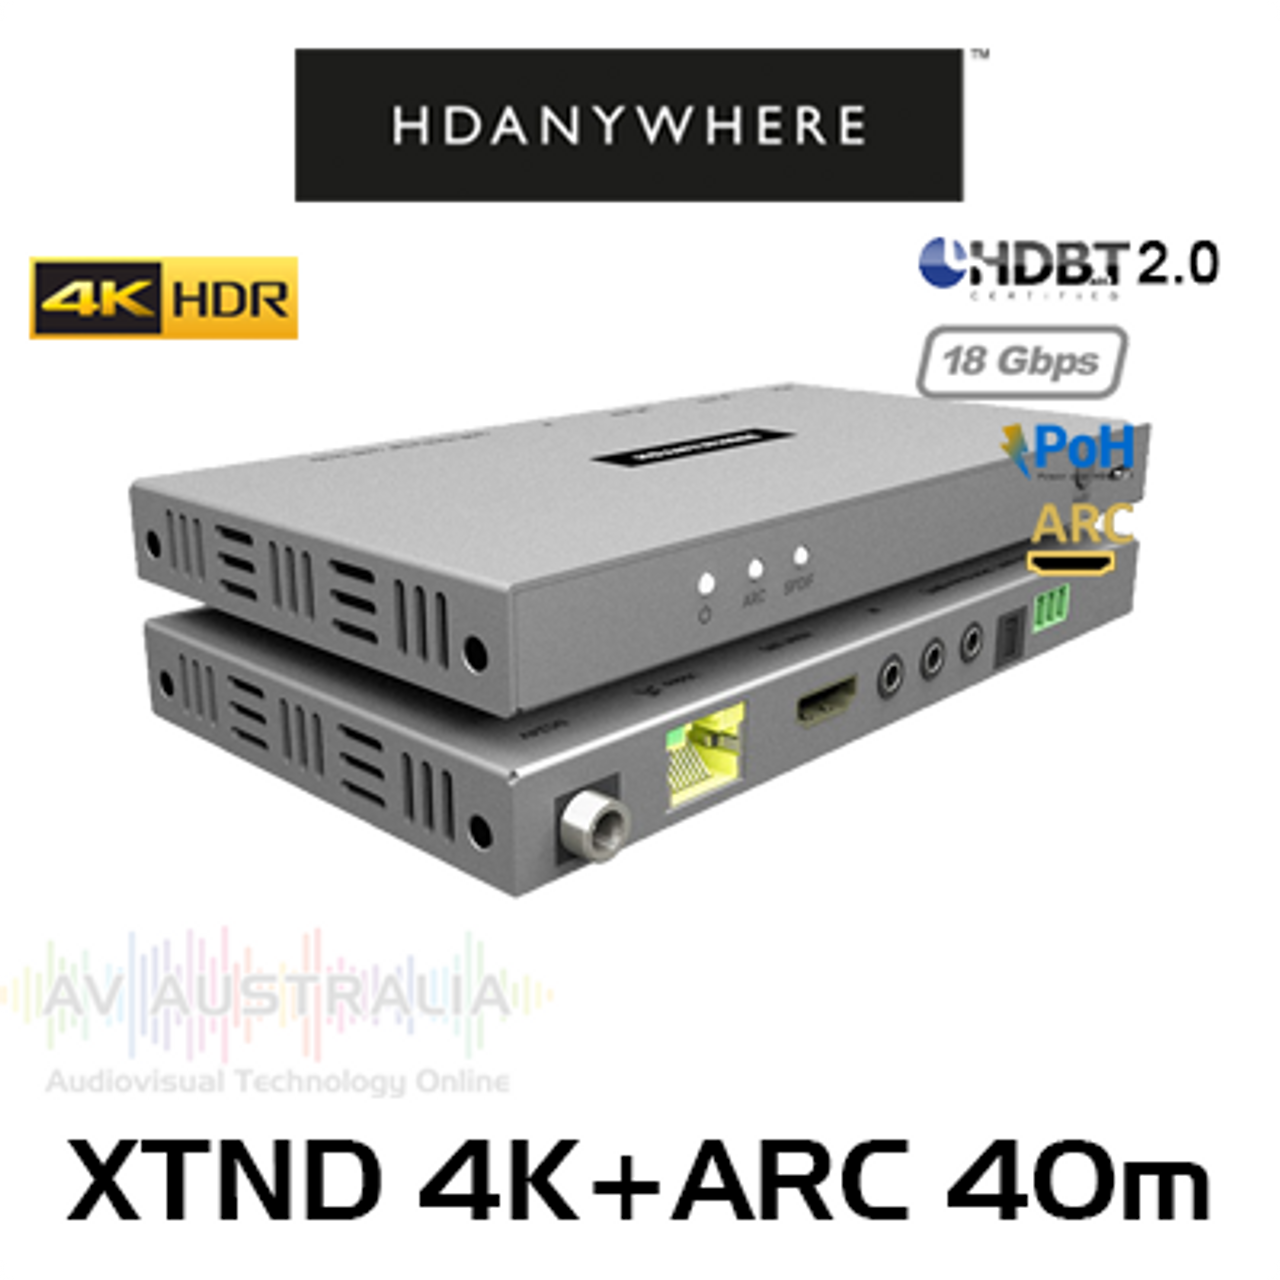 HDAnywhere XTND 4K HDR 18Gbps HDBaseT 2.0 with ARC & TPC Extender Set (40m)